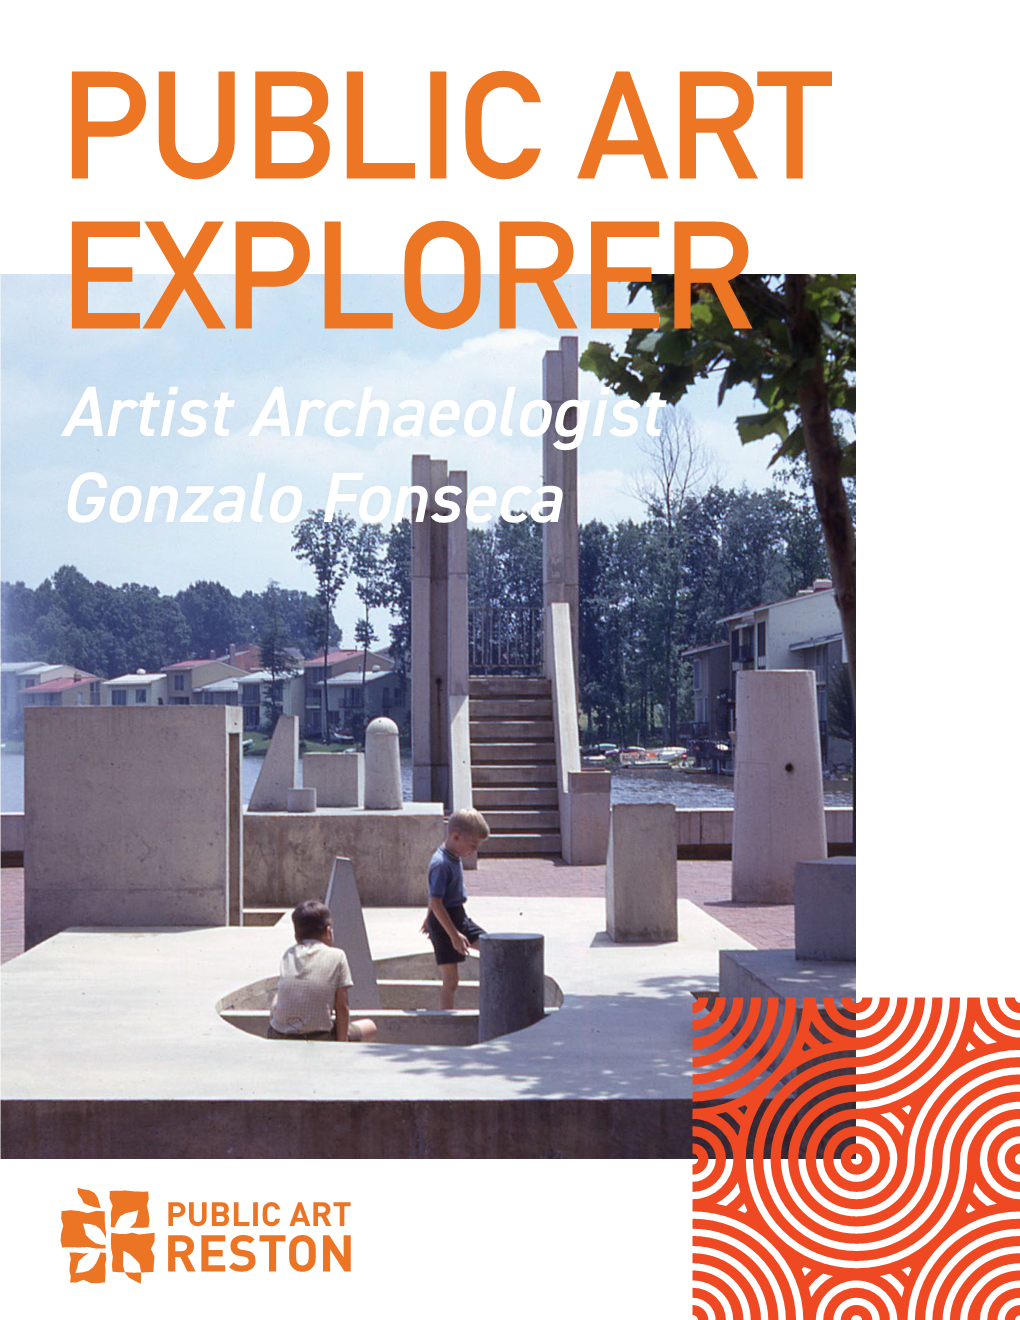 Artist Archaeologist Gonzalo Fonseca ARTIST ARCHAEOLOGIST GONZALO FONSECA (1922-1997)